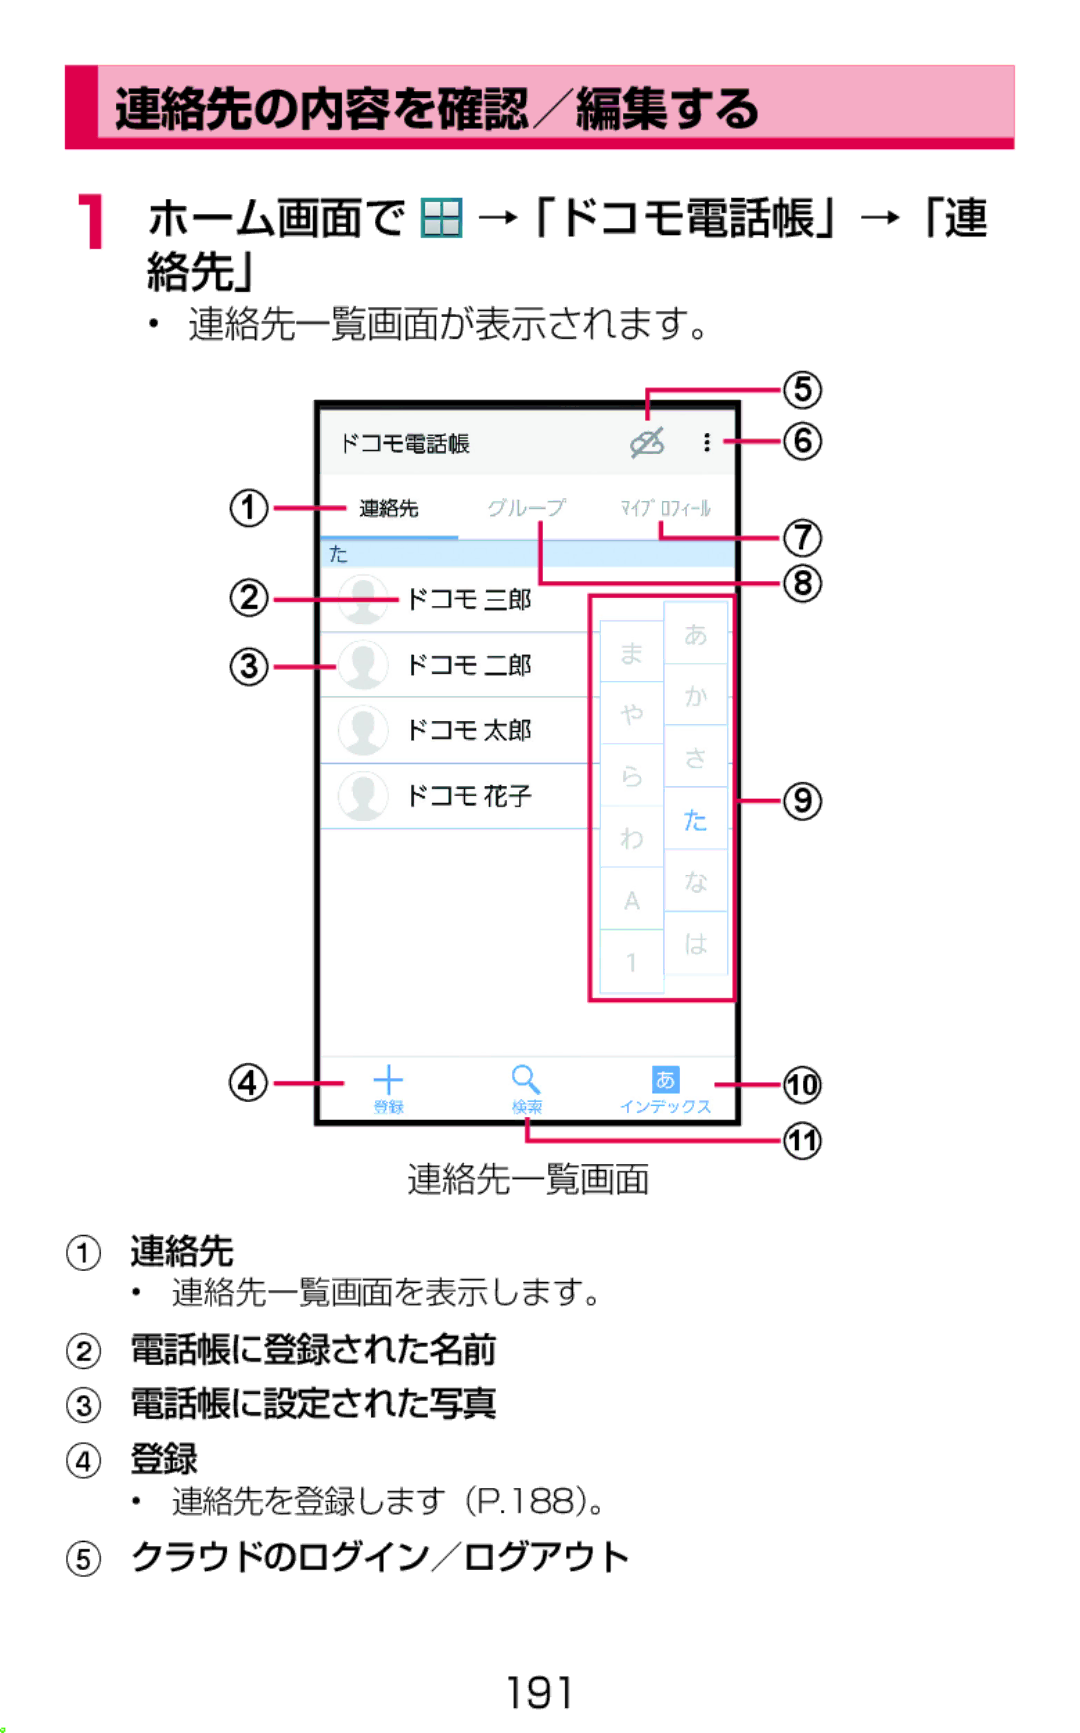 Samsung SM-G900DSIEDCM, SM-G900DZWEDCM, SM-G900DZKEDCM manual 連絡先の内容を確認／編集する, ホーム画面で絡先」 →「ドコモ電話帳」→「連, 連絡先一覧画面が表示されます。 